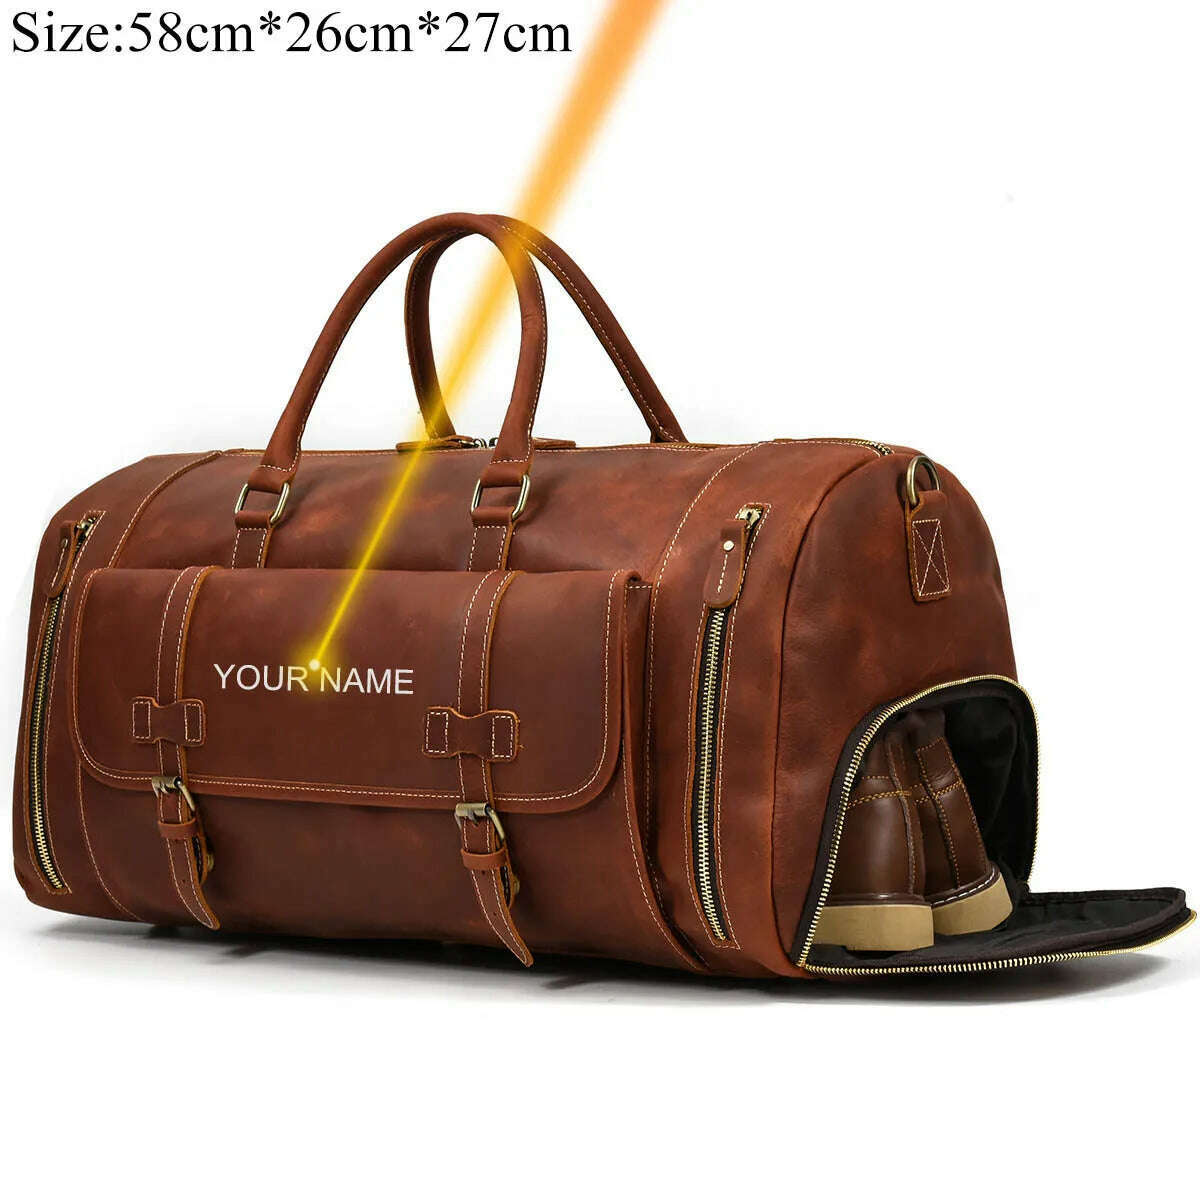 KIMLUD, Luufan Genuine Leather Men's Travel Bag With Shoe Pocket Retro Crazy Horse Leather Big Capacity Luggag Bag Business Trip Handbag, Dark(58cm)--laser / China, KIMLUD Womens Clothes